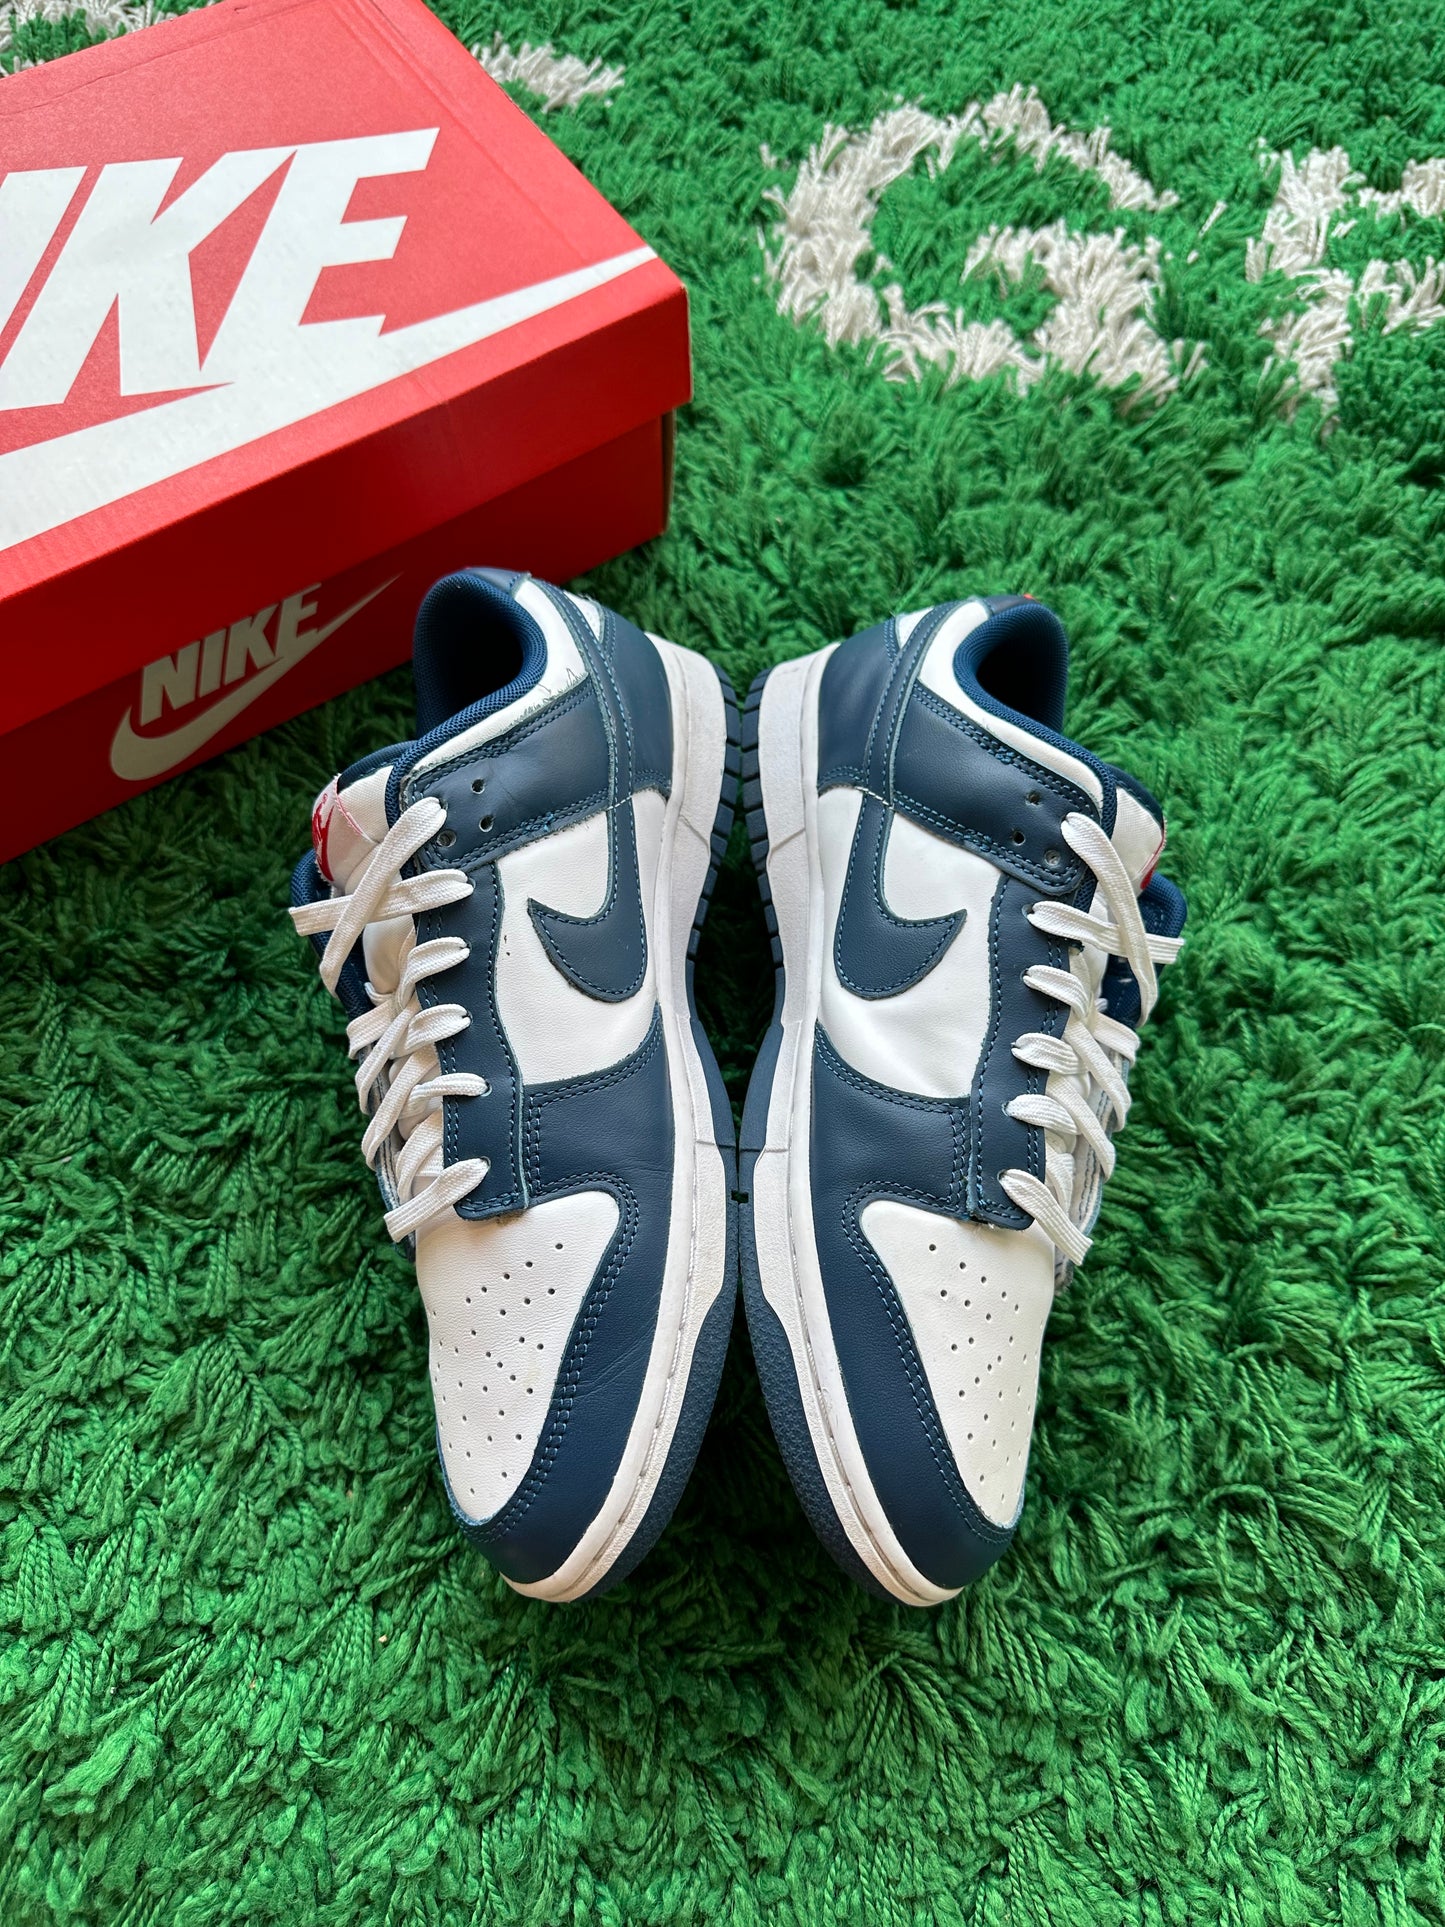 Nike Dunk Low “Valerian Blue”